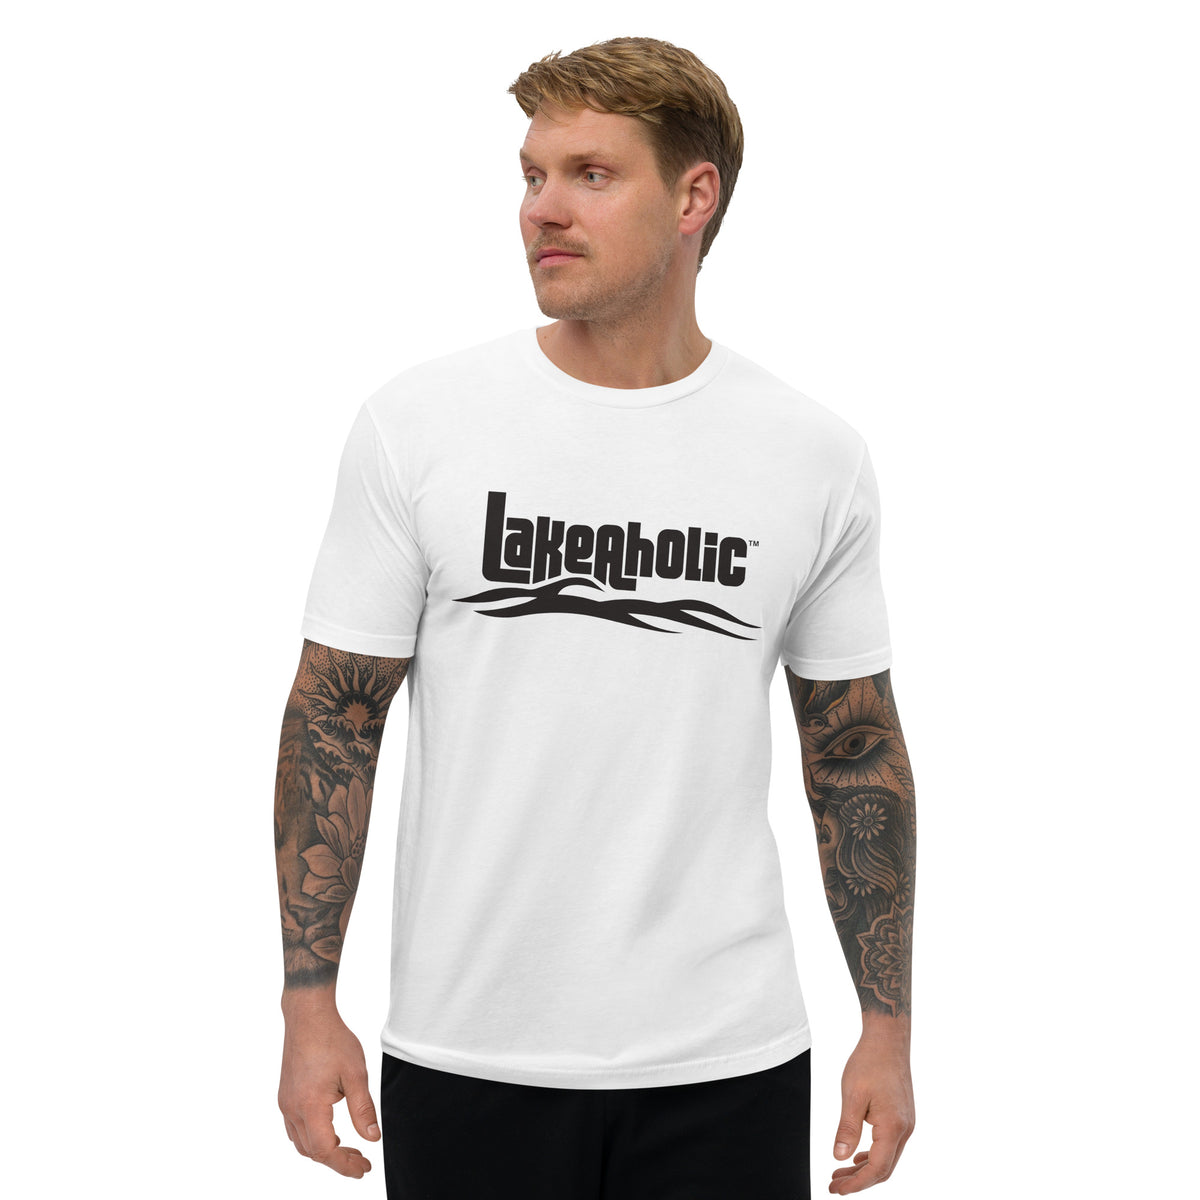 Lakeaholic Men's Short Sleeve T-shirt